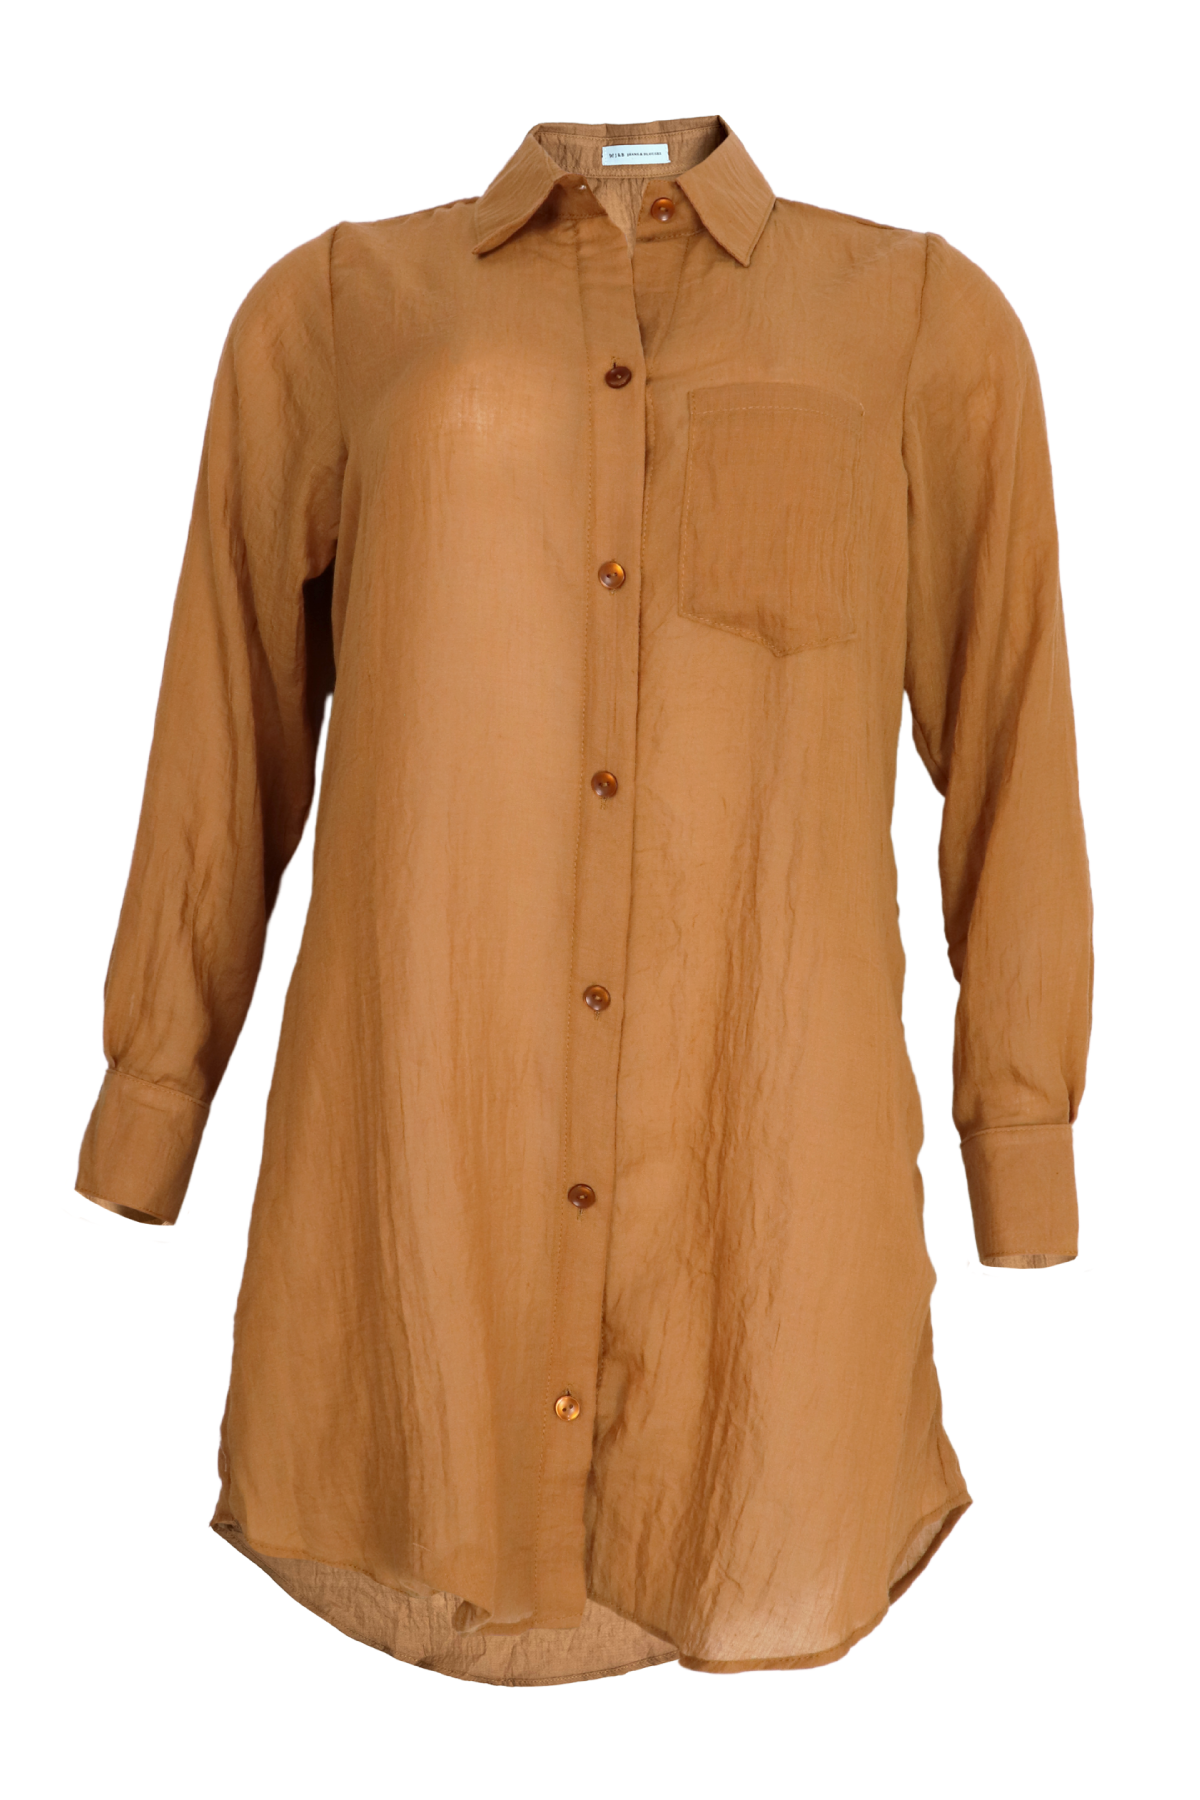 Hermosa camisa manga larga transparente color camel